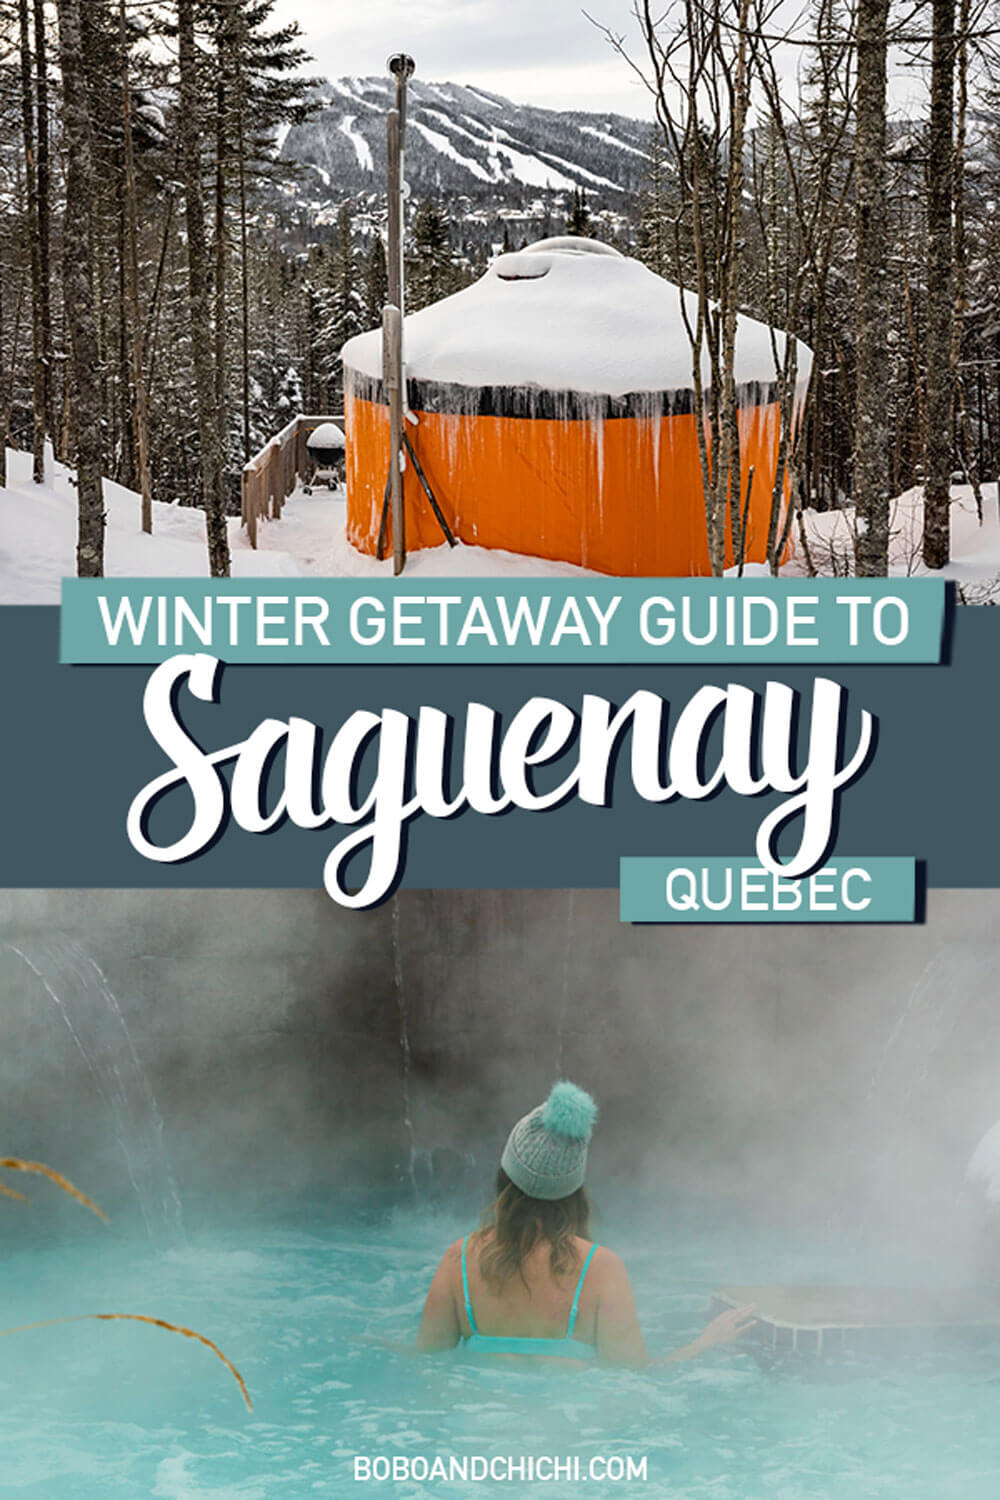 winter getaway guide to saguenay-lac-saint-jean quebec canada